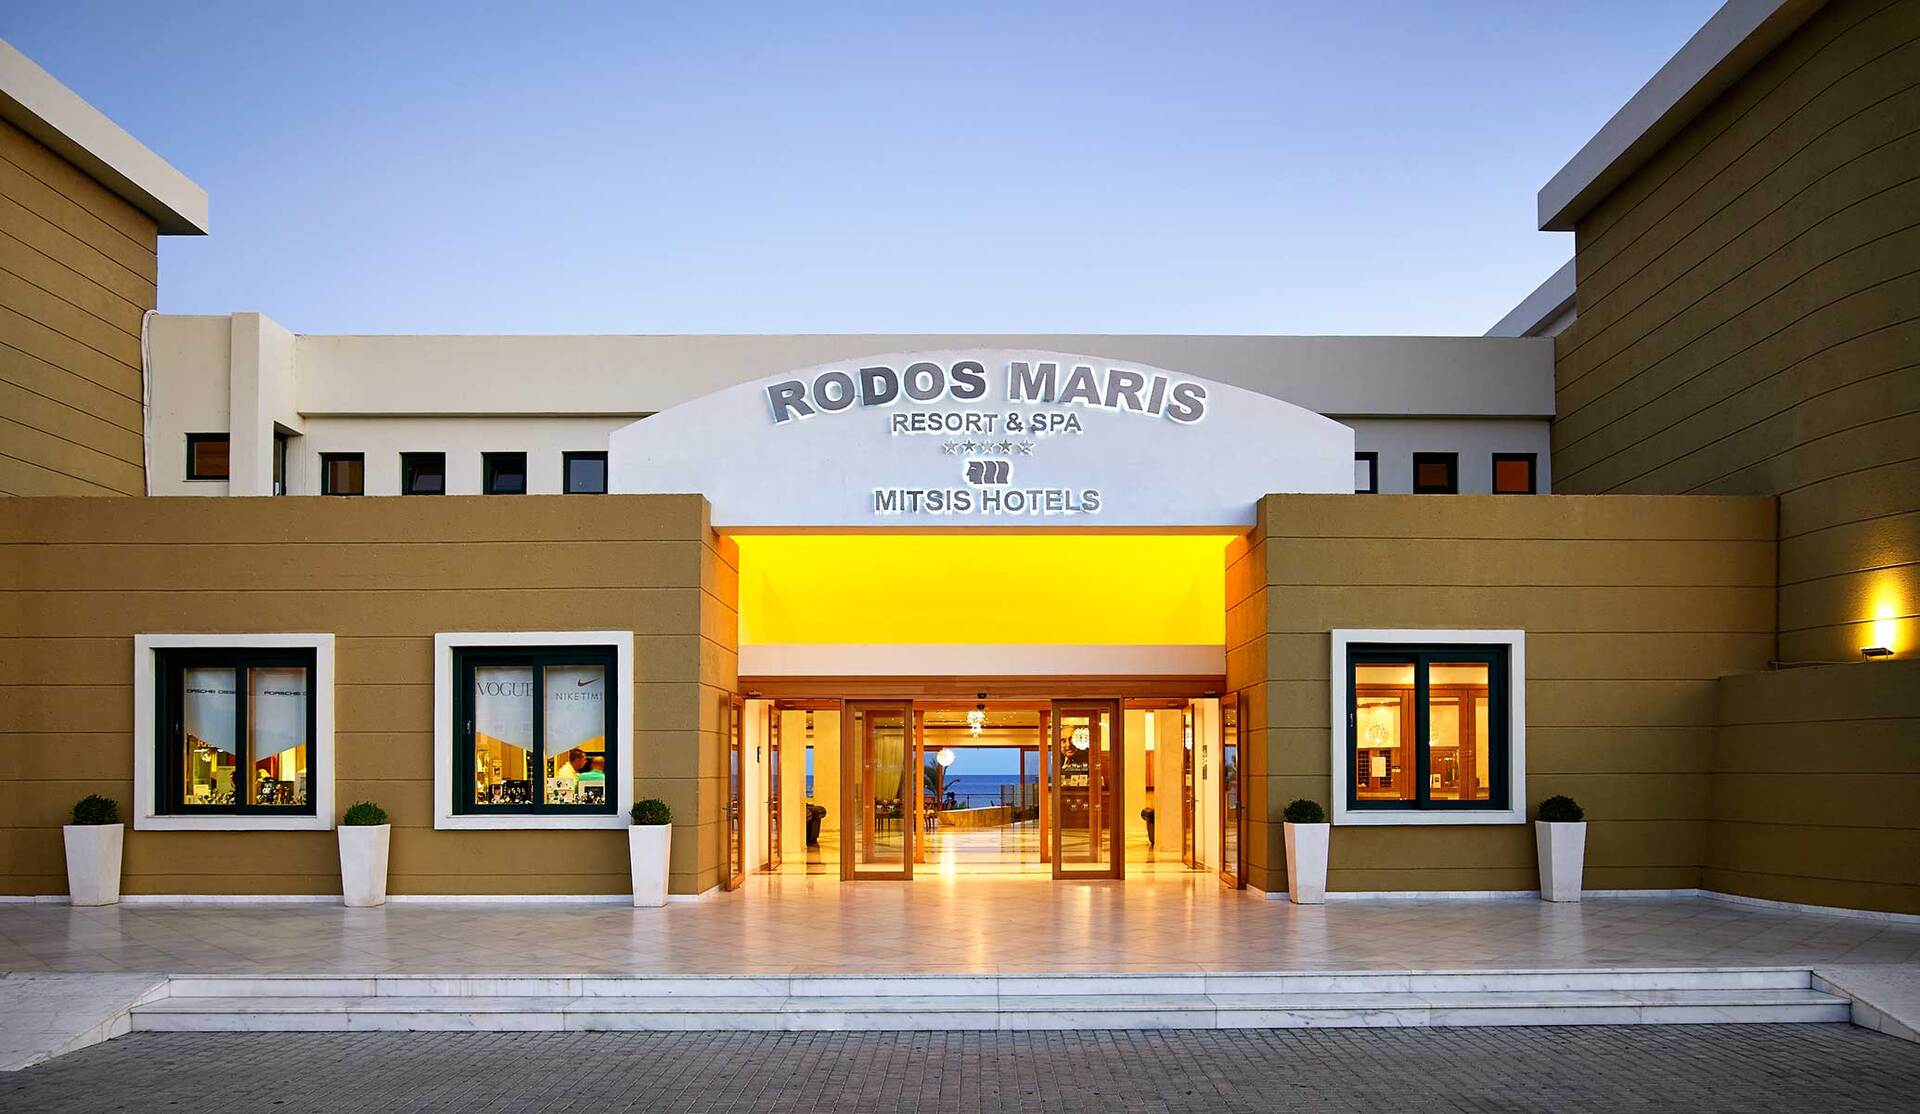 Mitsis Rodos Maris Resort & Spa: General view